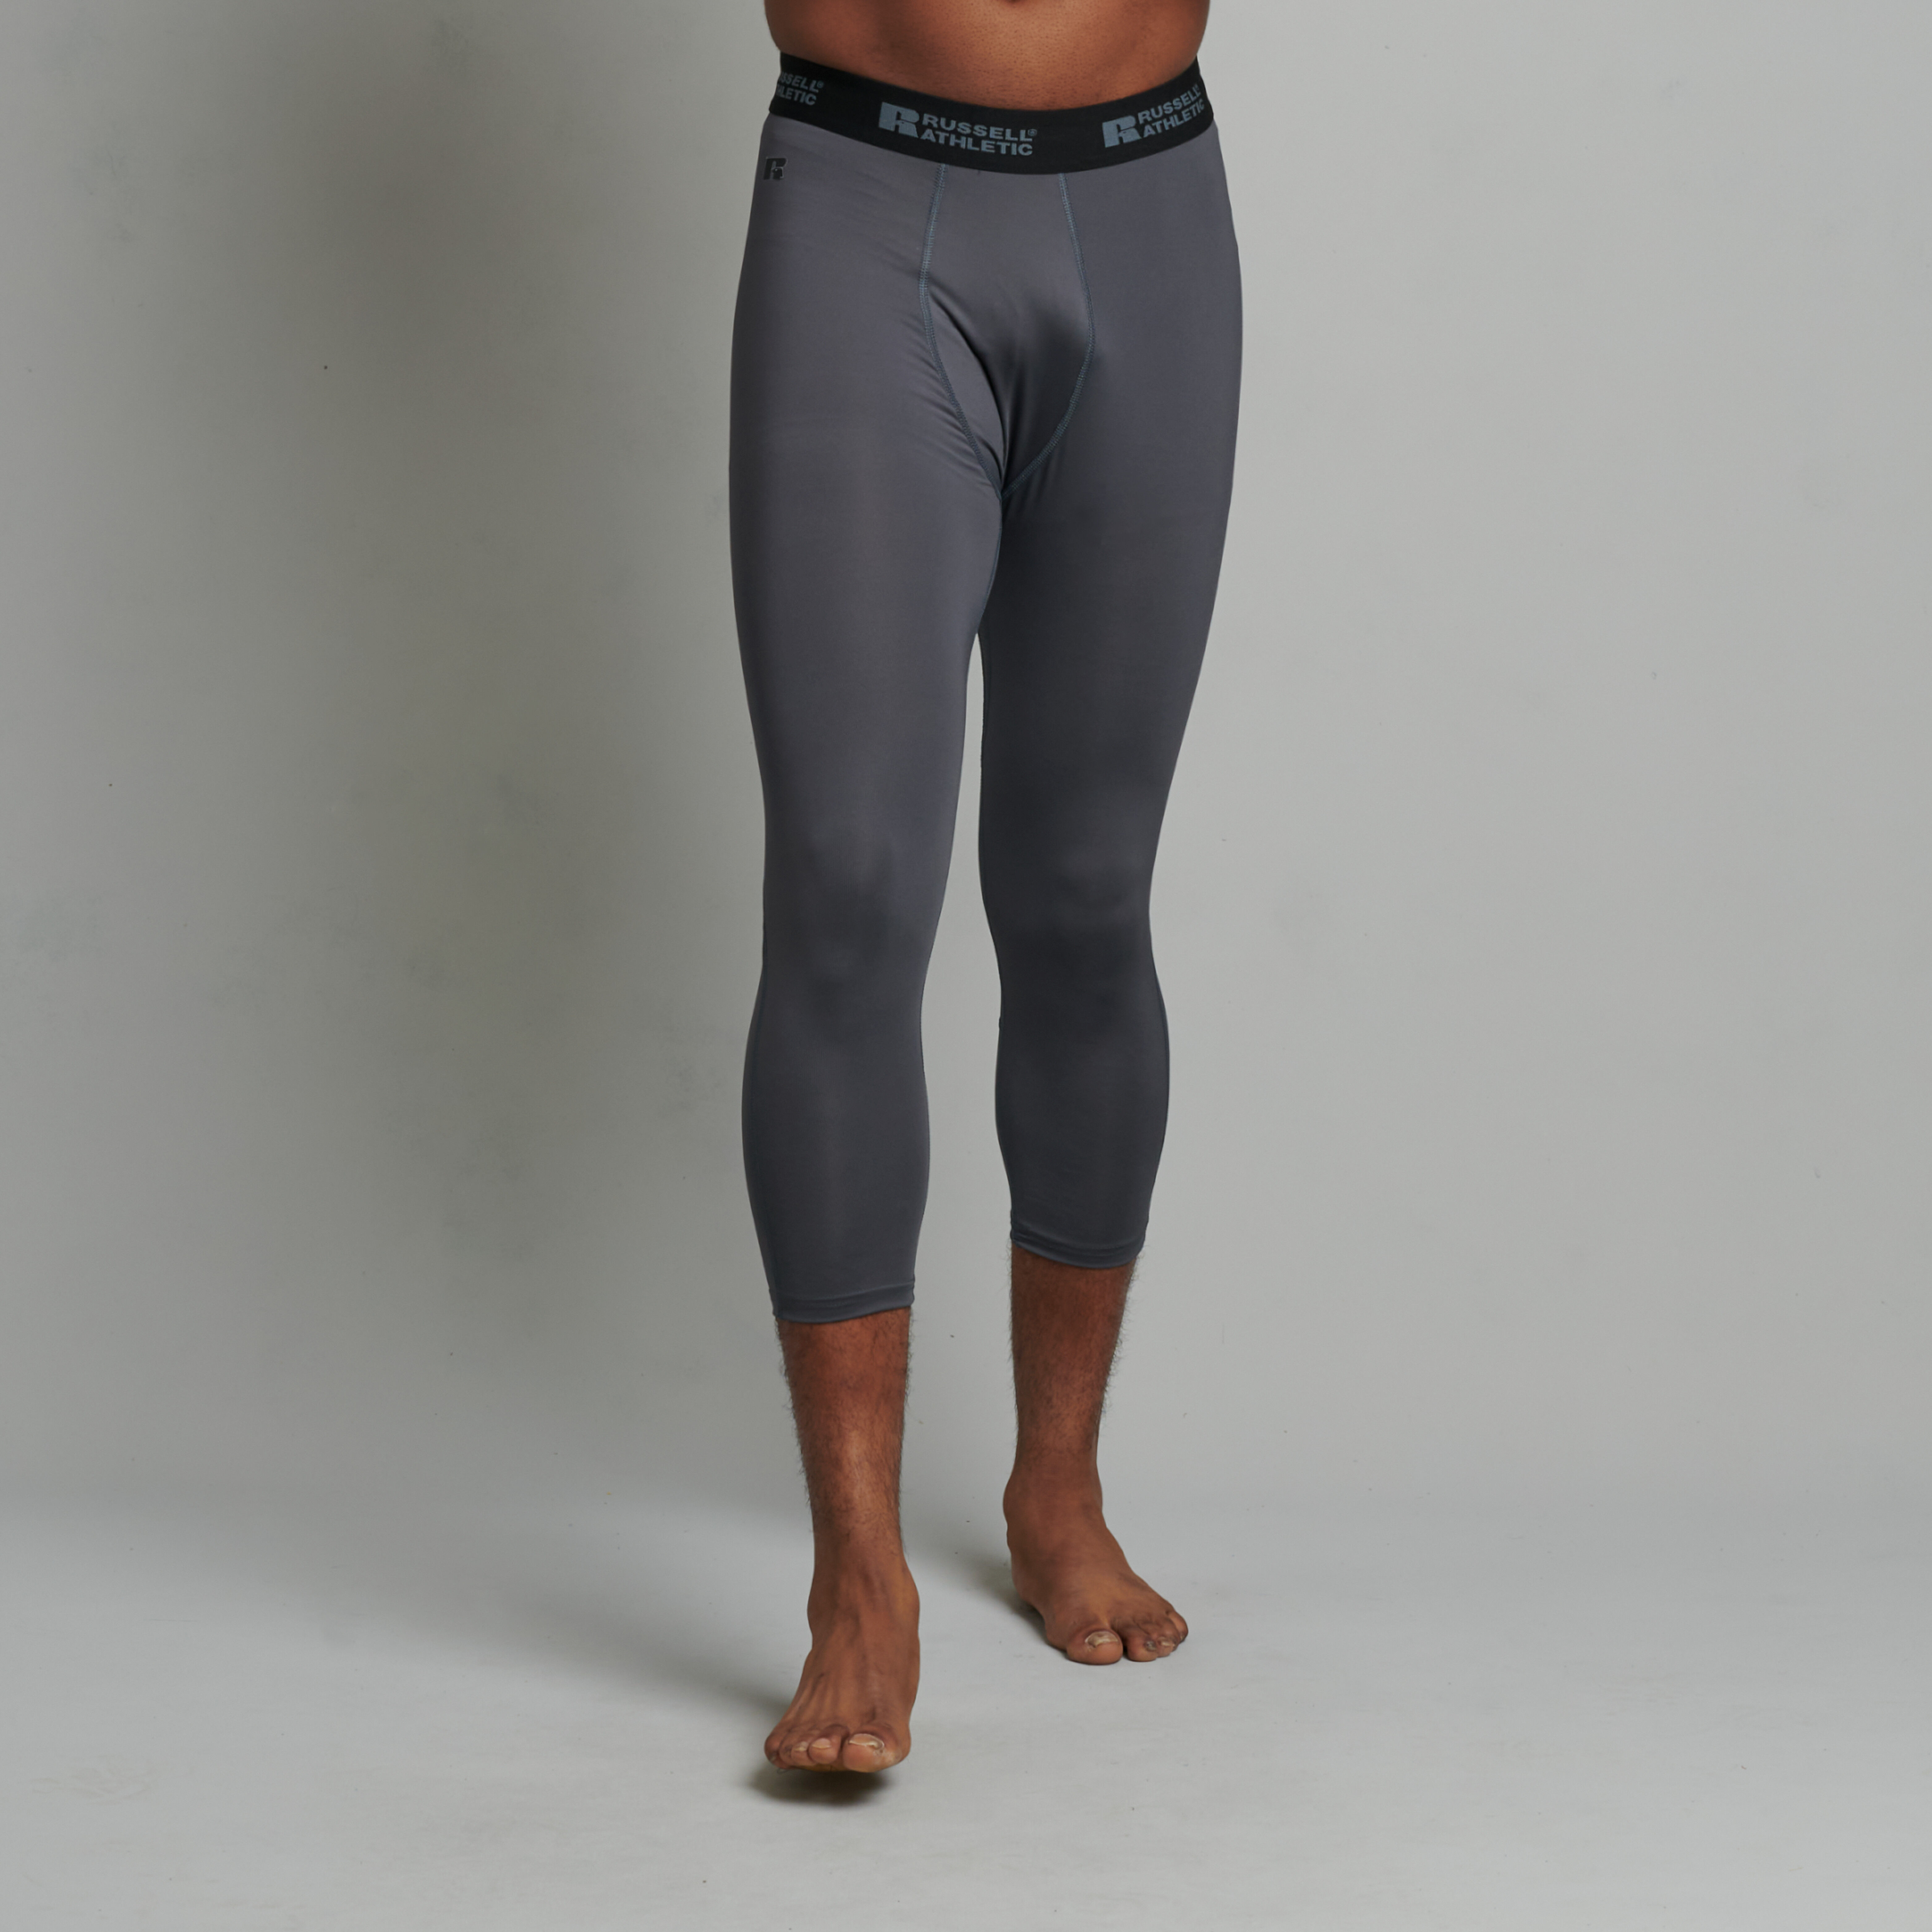 Why Do Guys Like Yoga Pants So Much? — Men's Yoga Journal